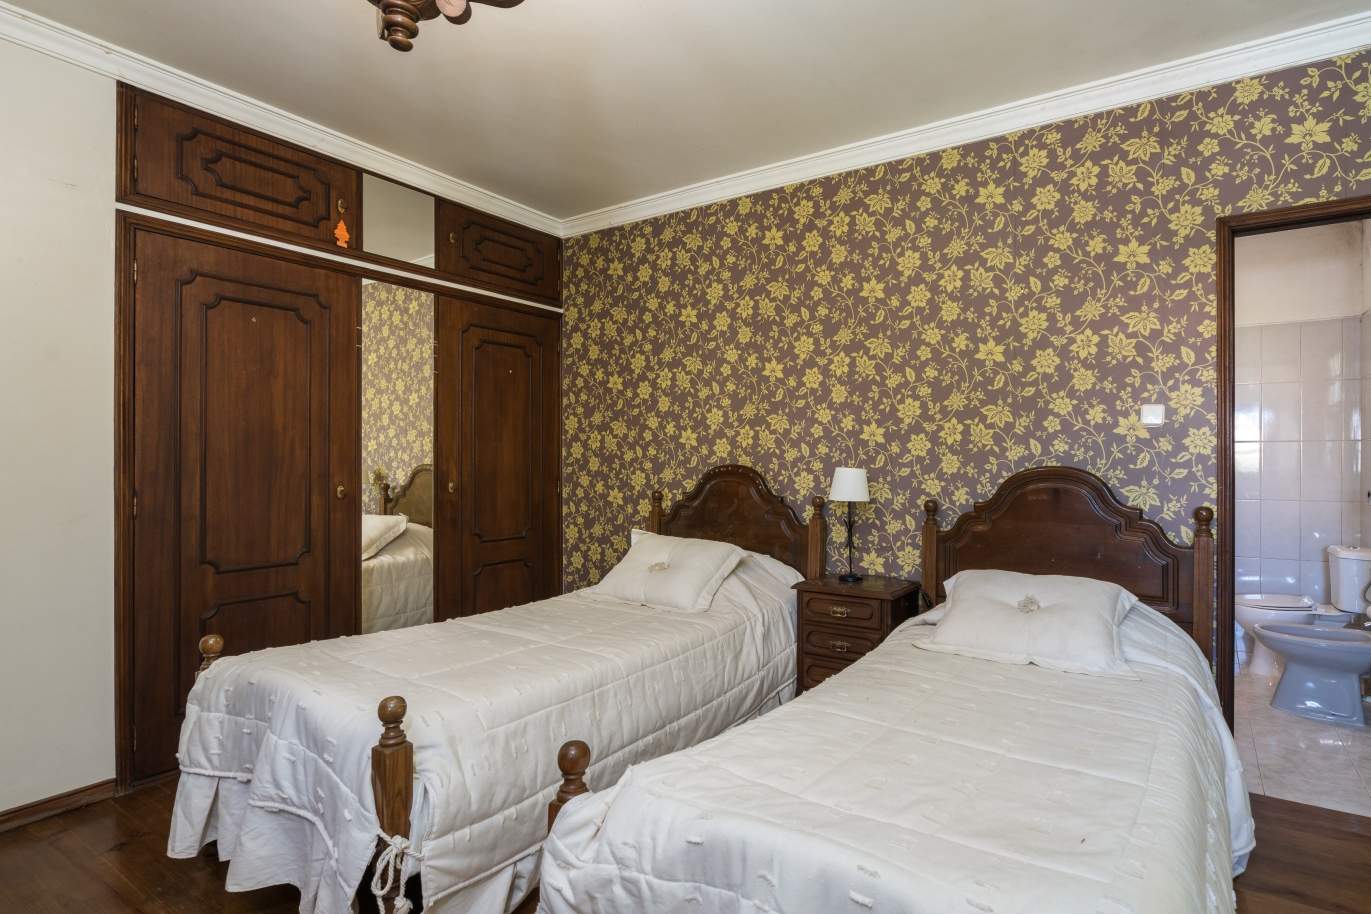 4 Bedroom Villa with plot of land, sale, Albufeira, Algarve, Portugal_143769